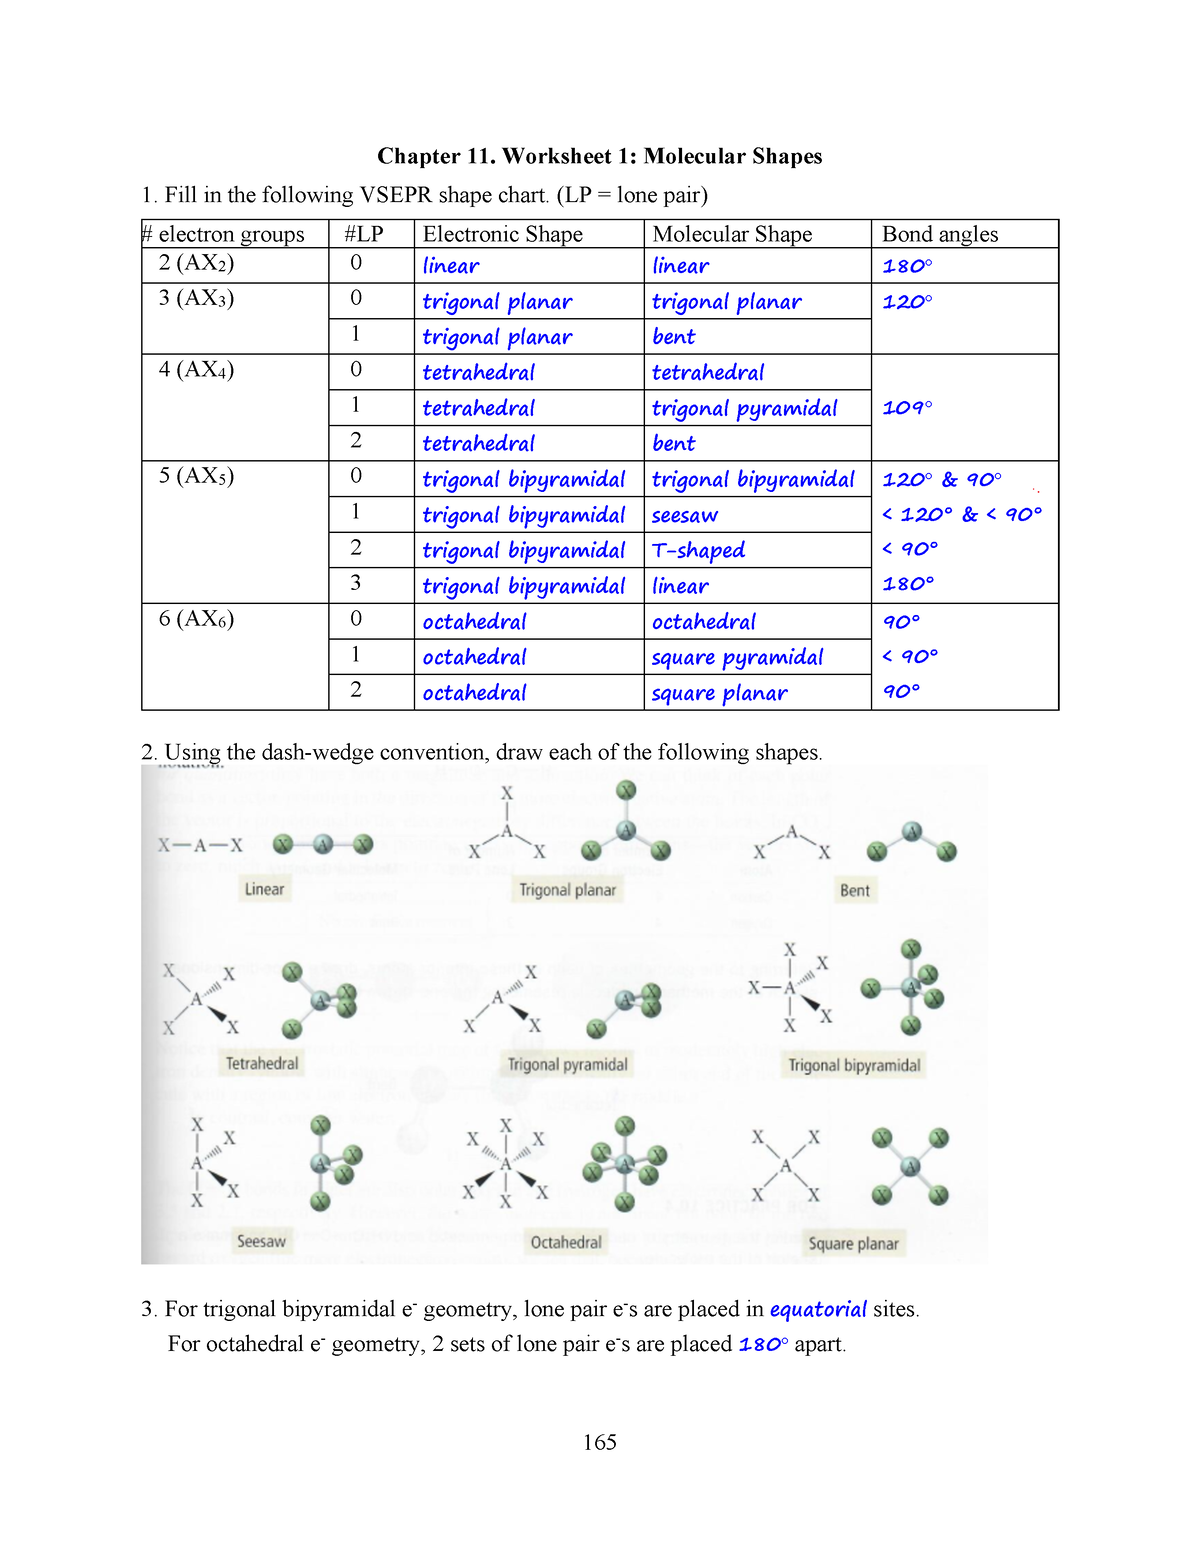 molecular geometry chart